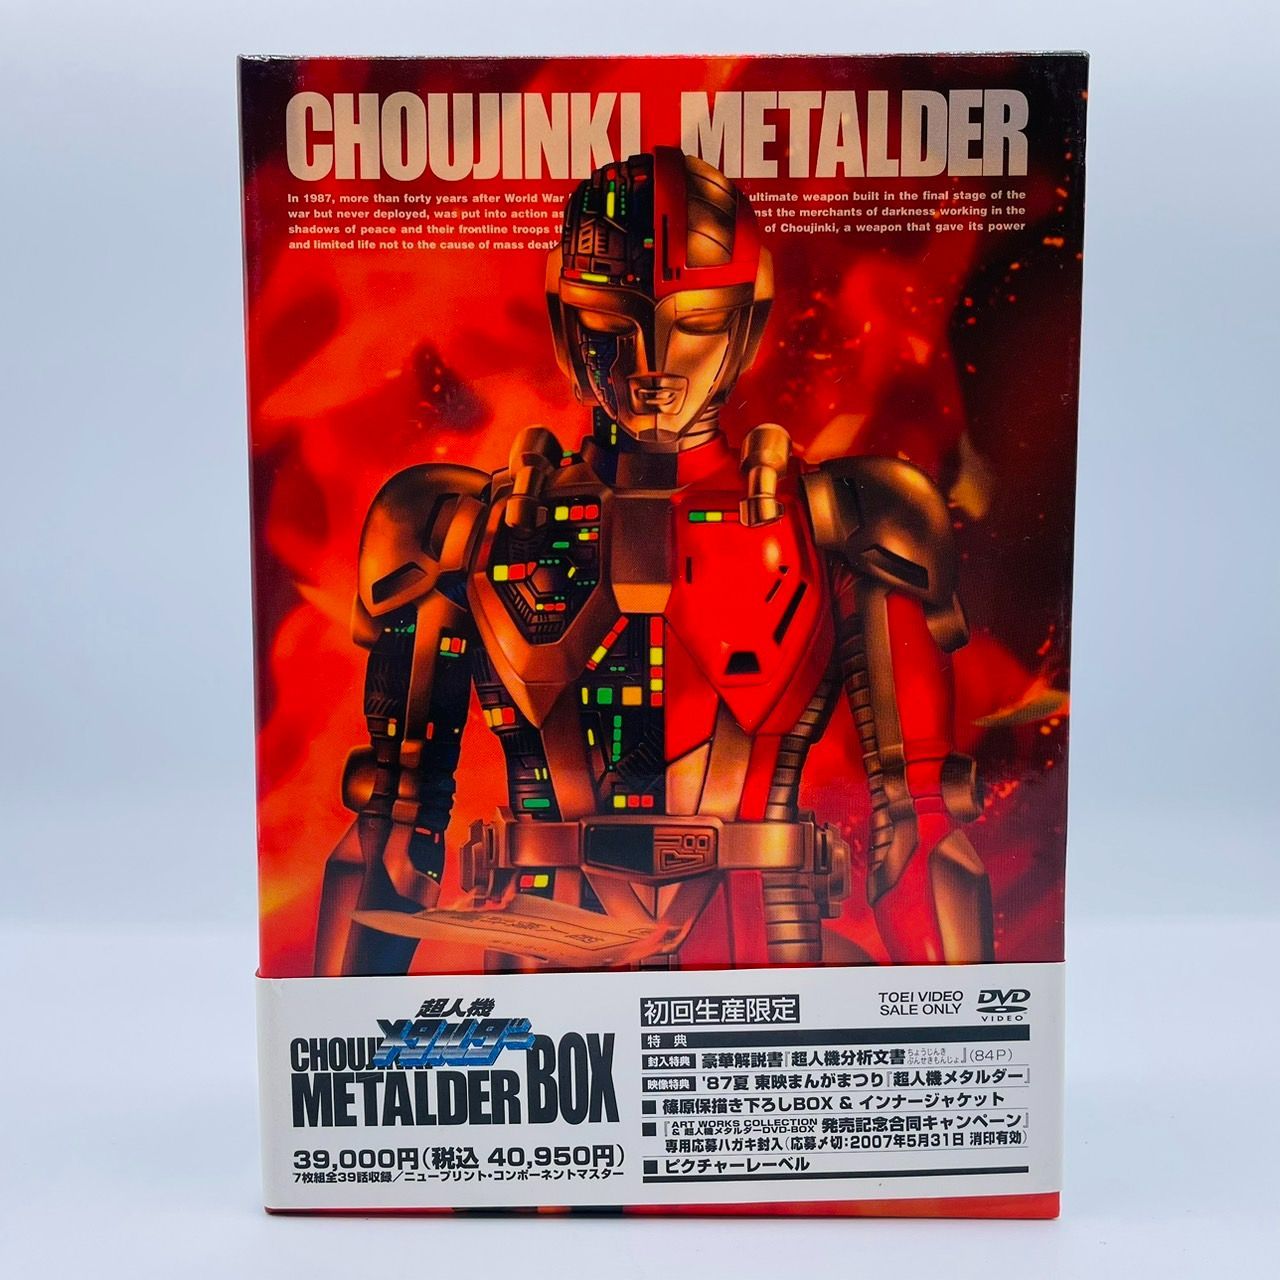 超人機 メタルダー BOX DVD 初回生産限定 / CHOUJINKI METALDER 東映